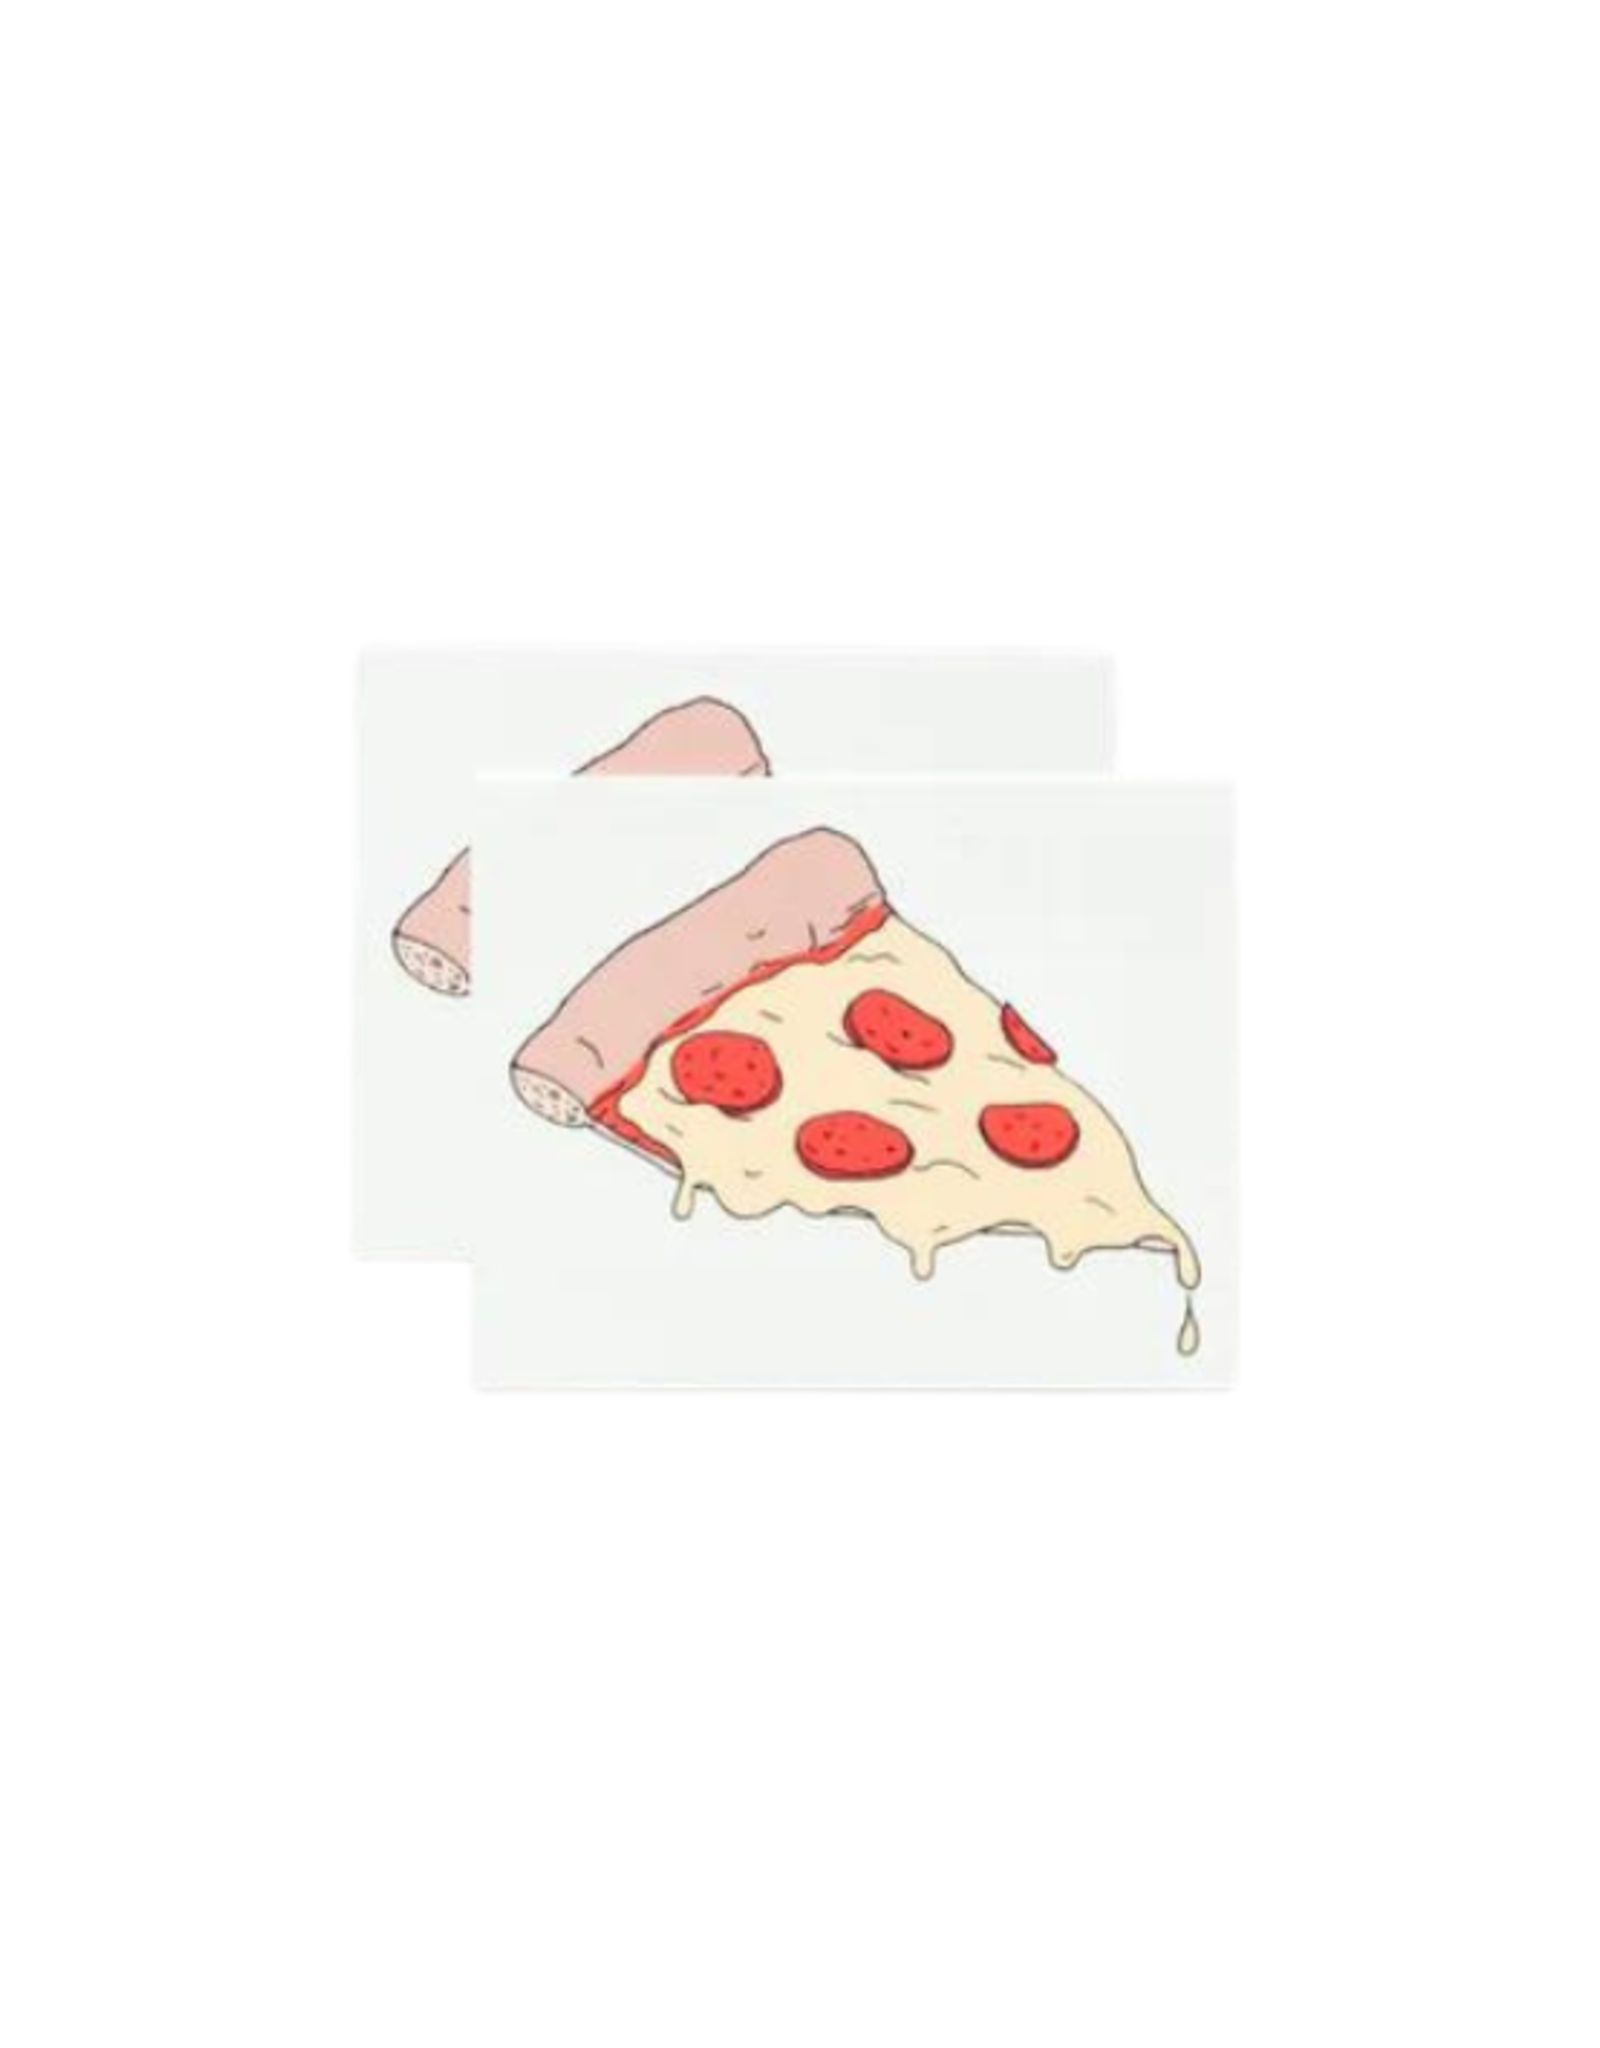 Tattly Tattly - Pizza Slice Tattoo Pair